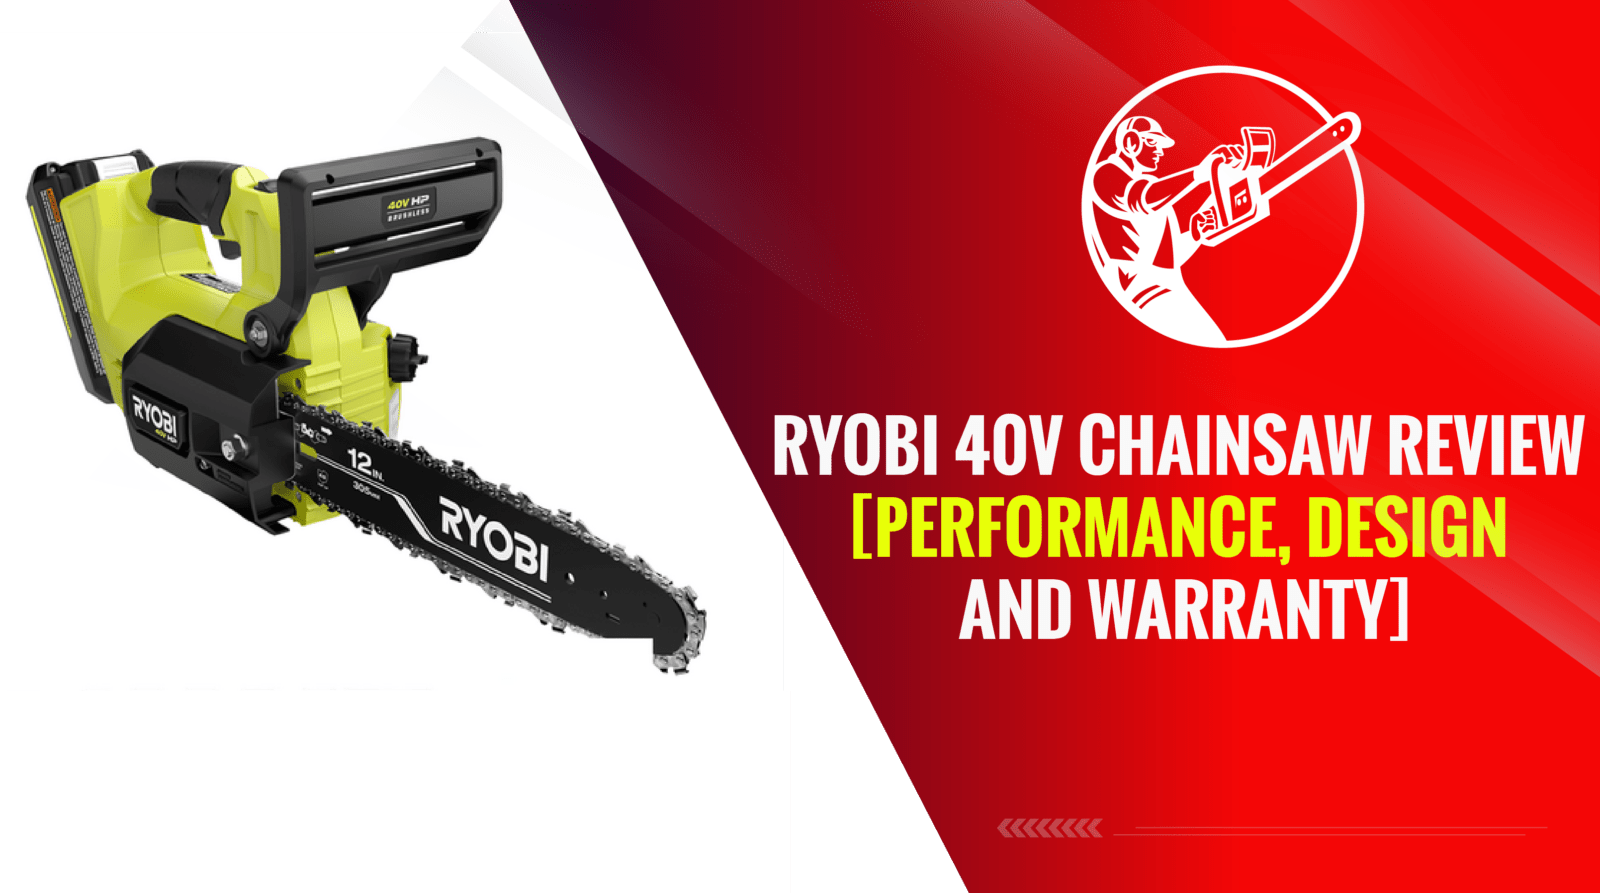 Ryobi 40v chainsaw review [Performance, Design and Warranty]